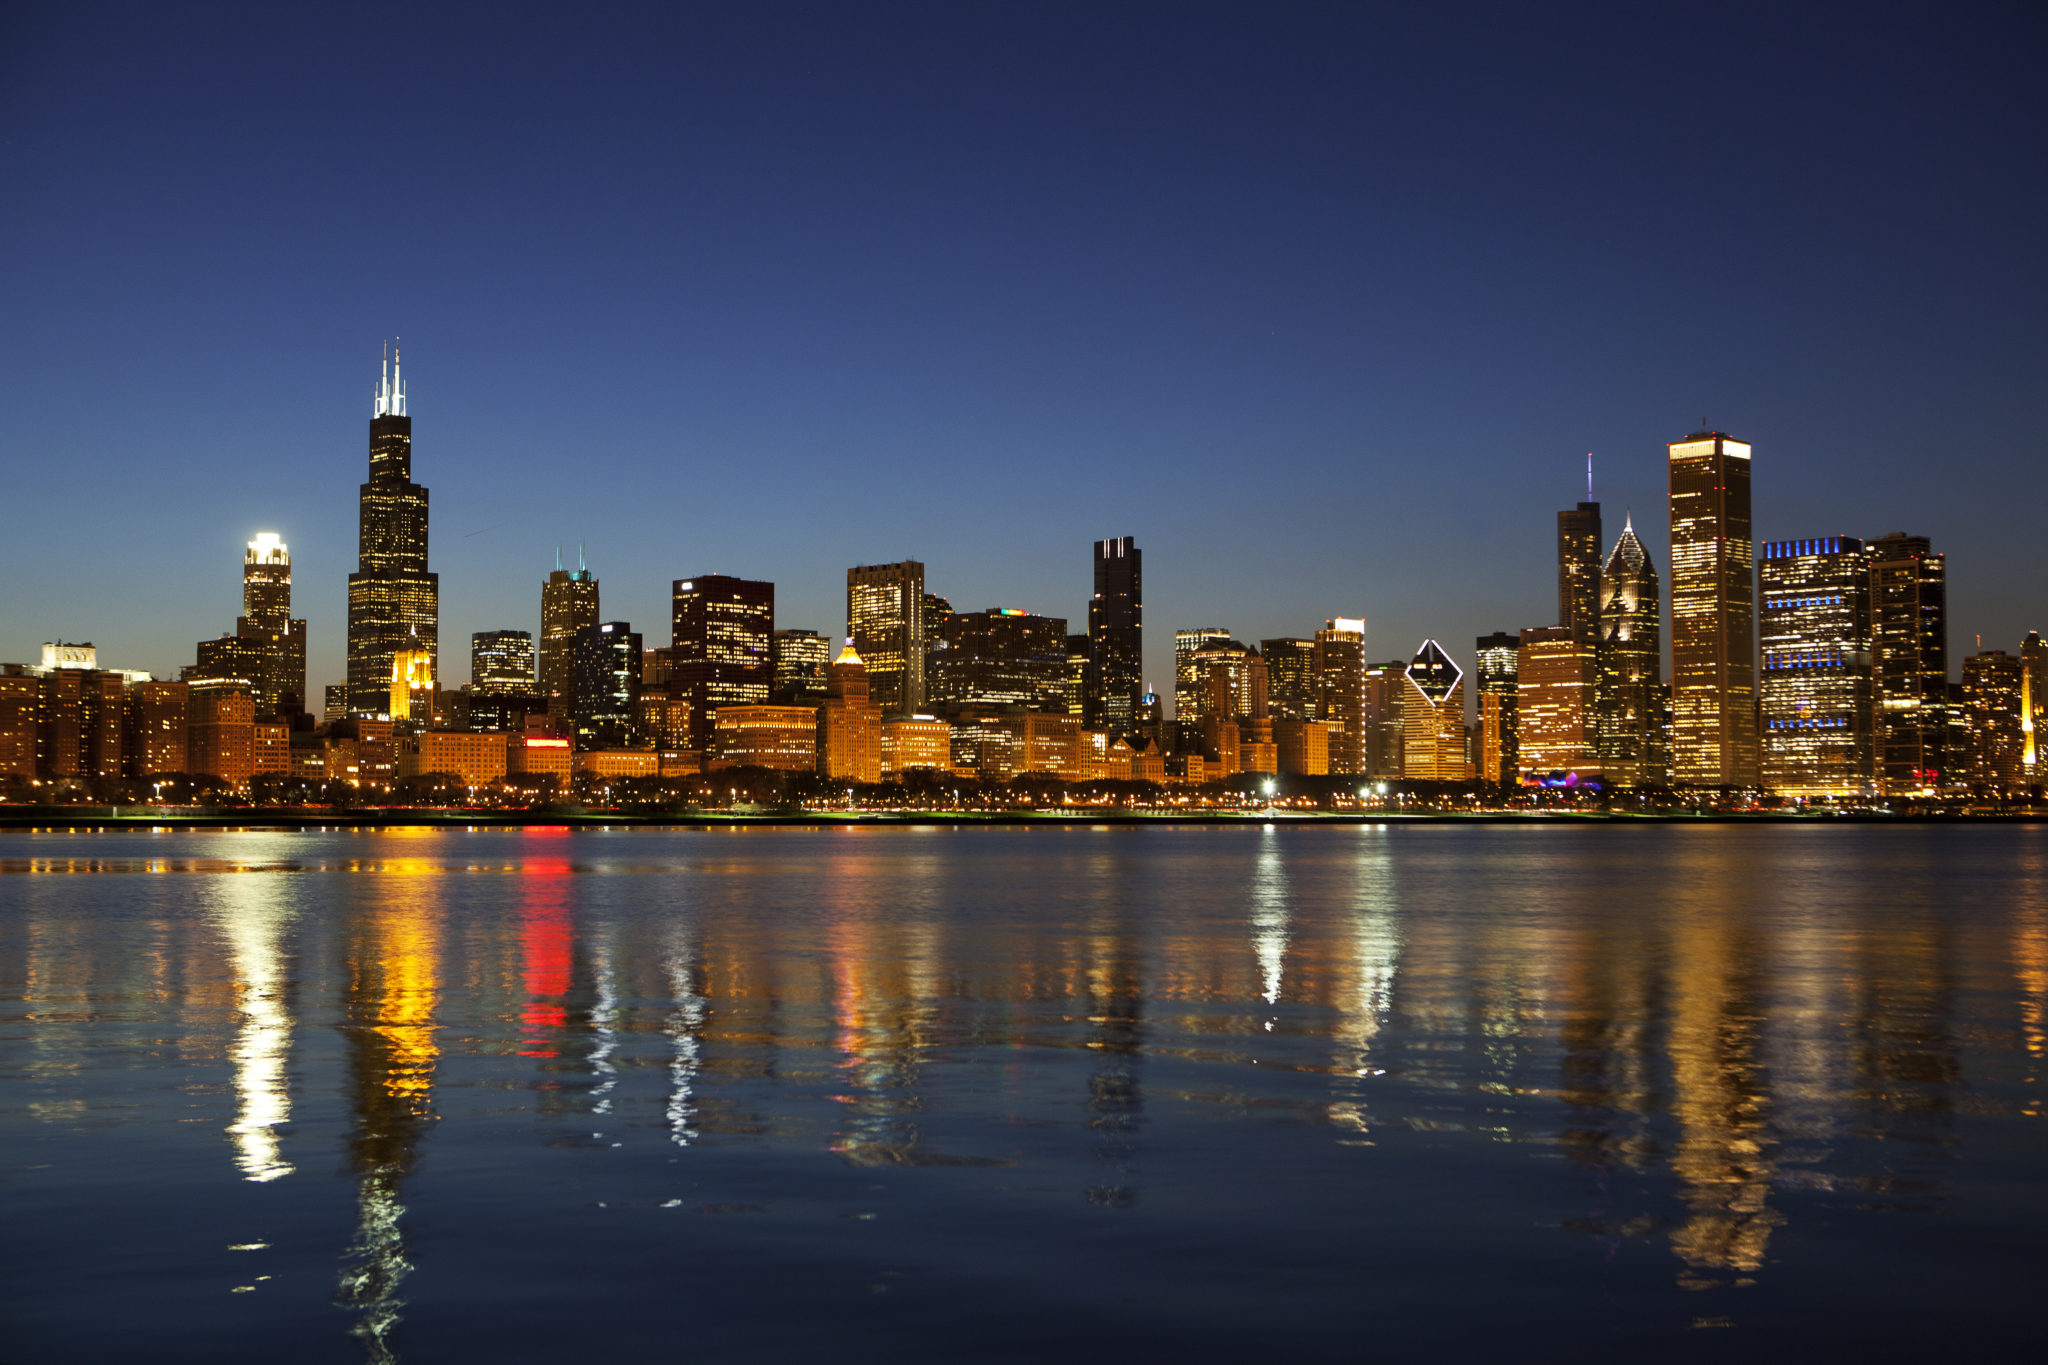 Chicago at dusk image via Shutterstock.